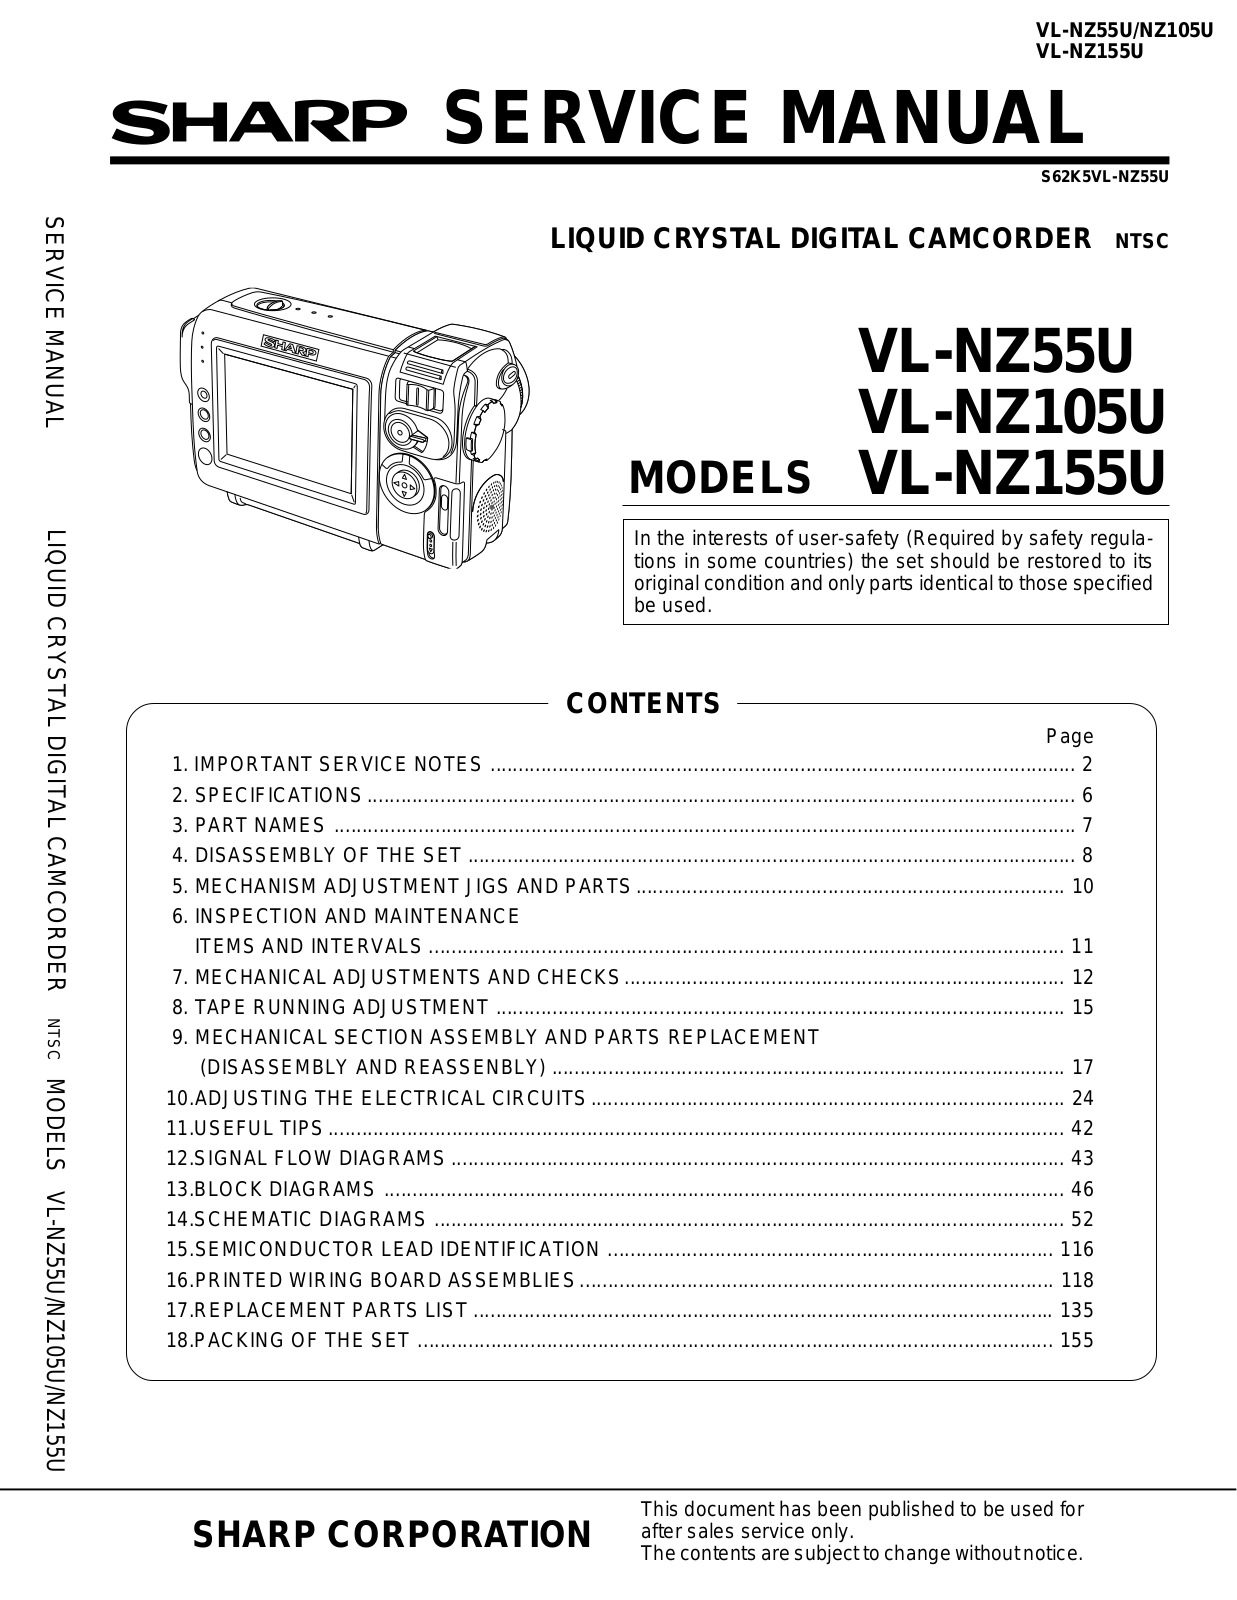 SHARP VLNZ55U, VLNZ105U, VLNZ155U Service Manual